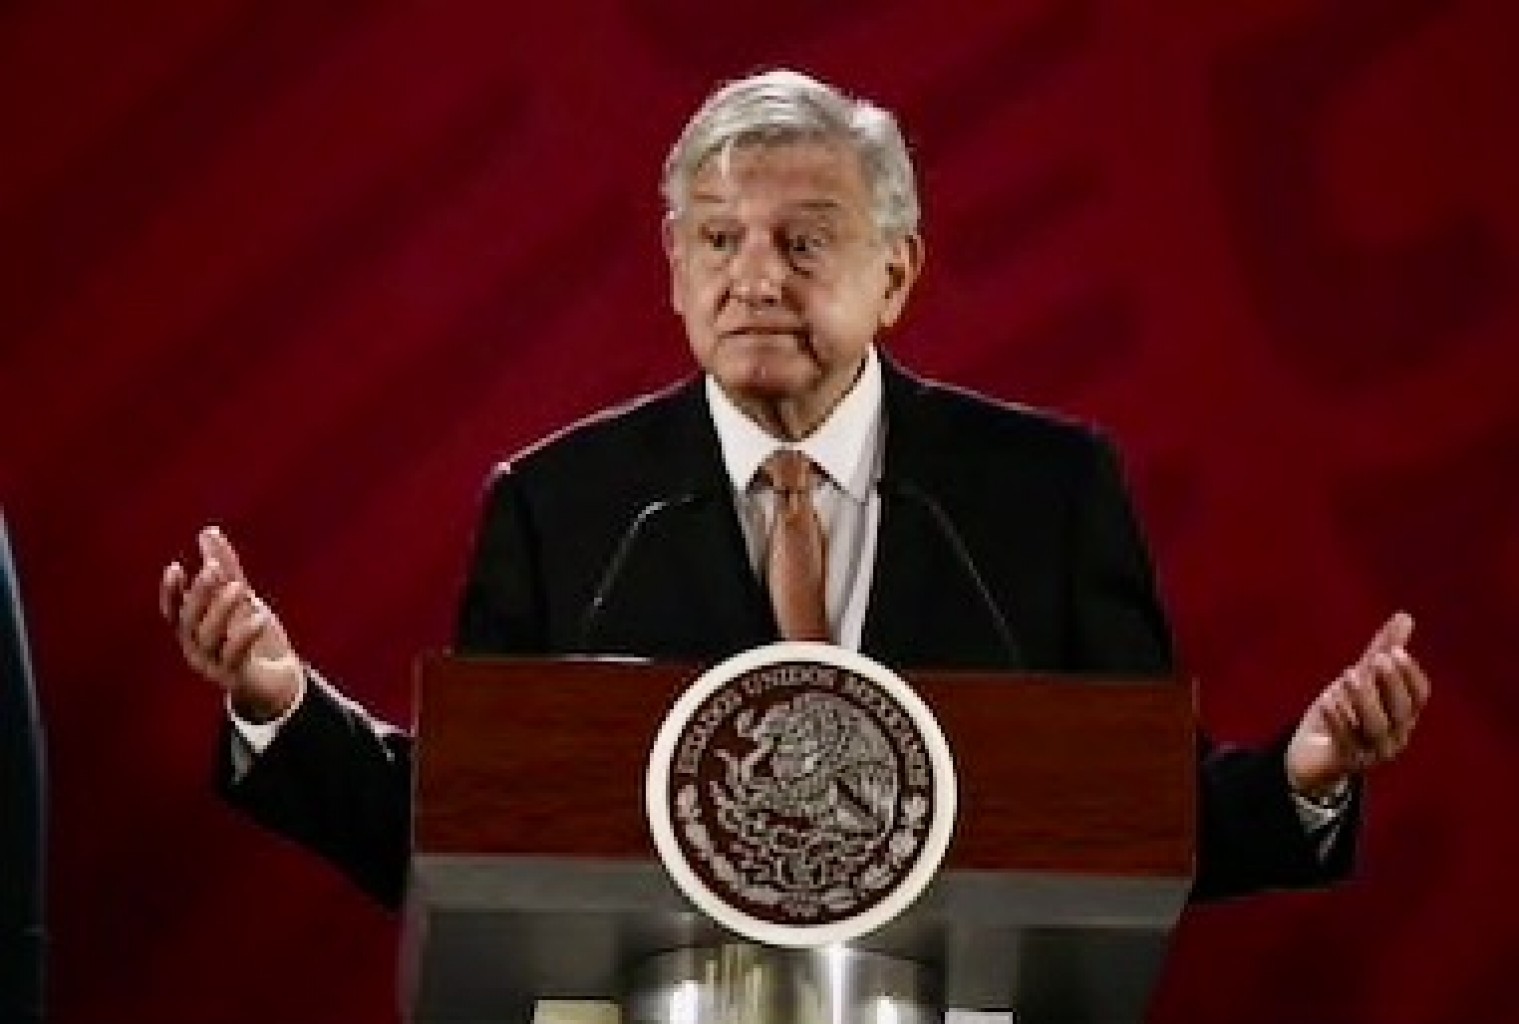 Un año de presidencia de López Obrador